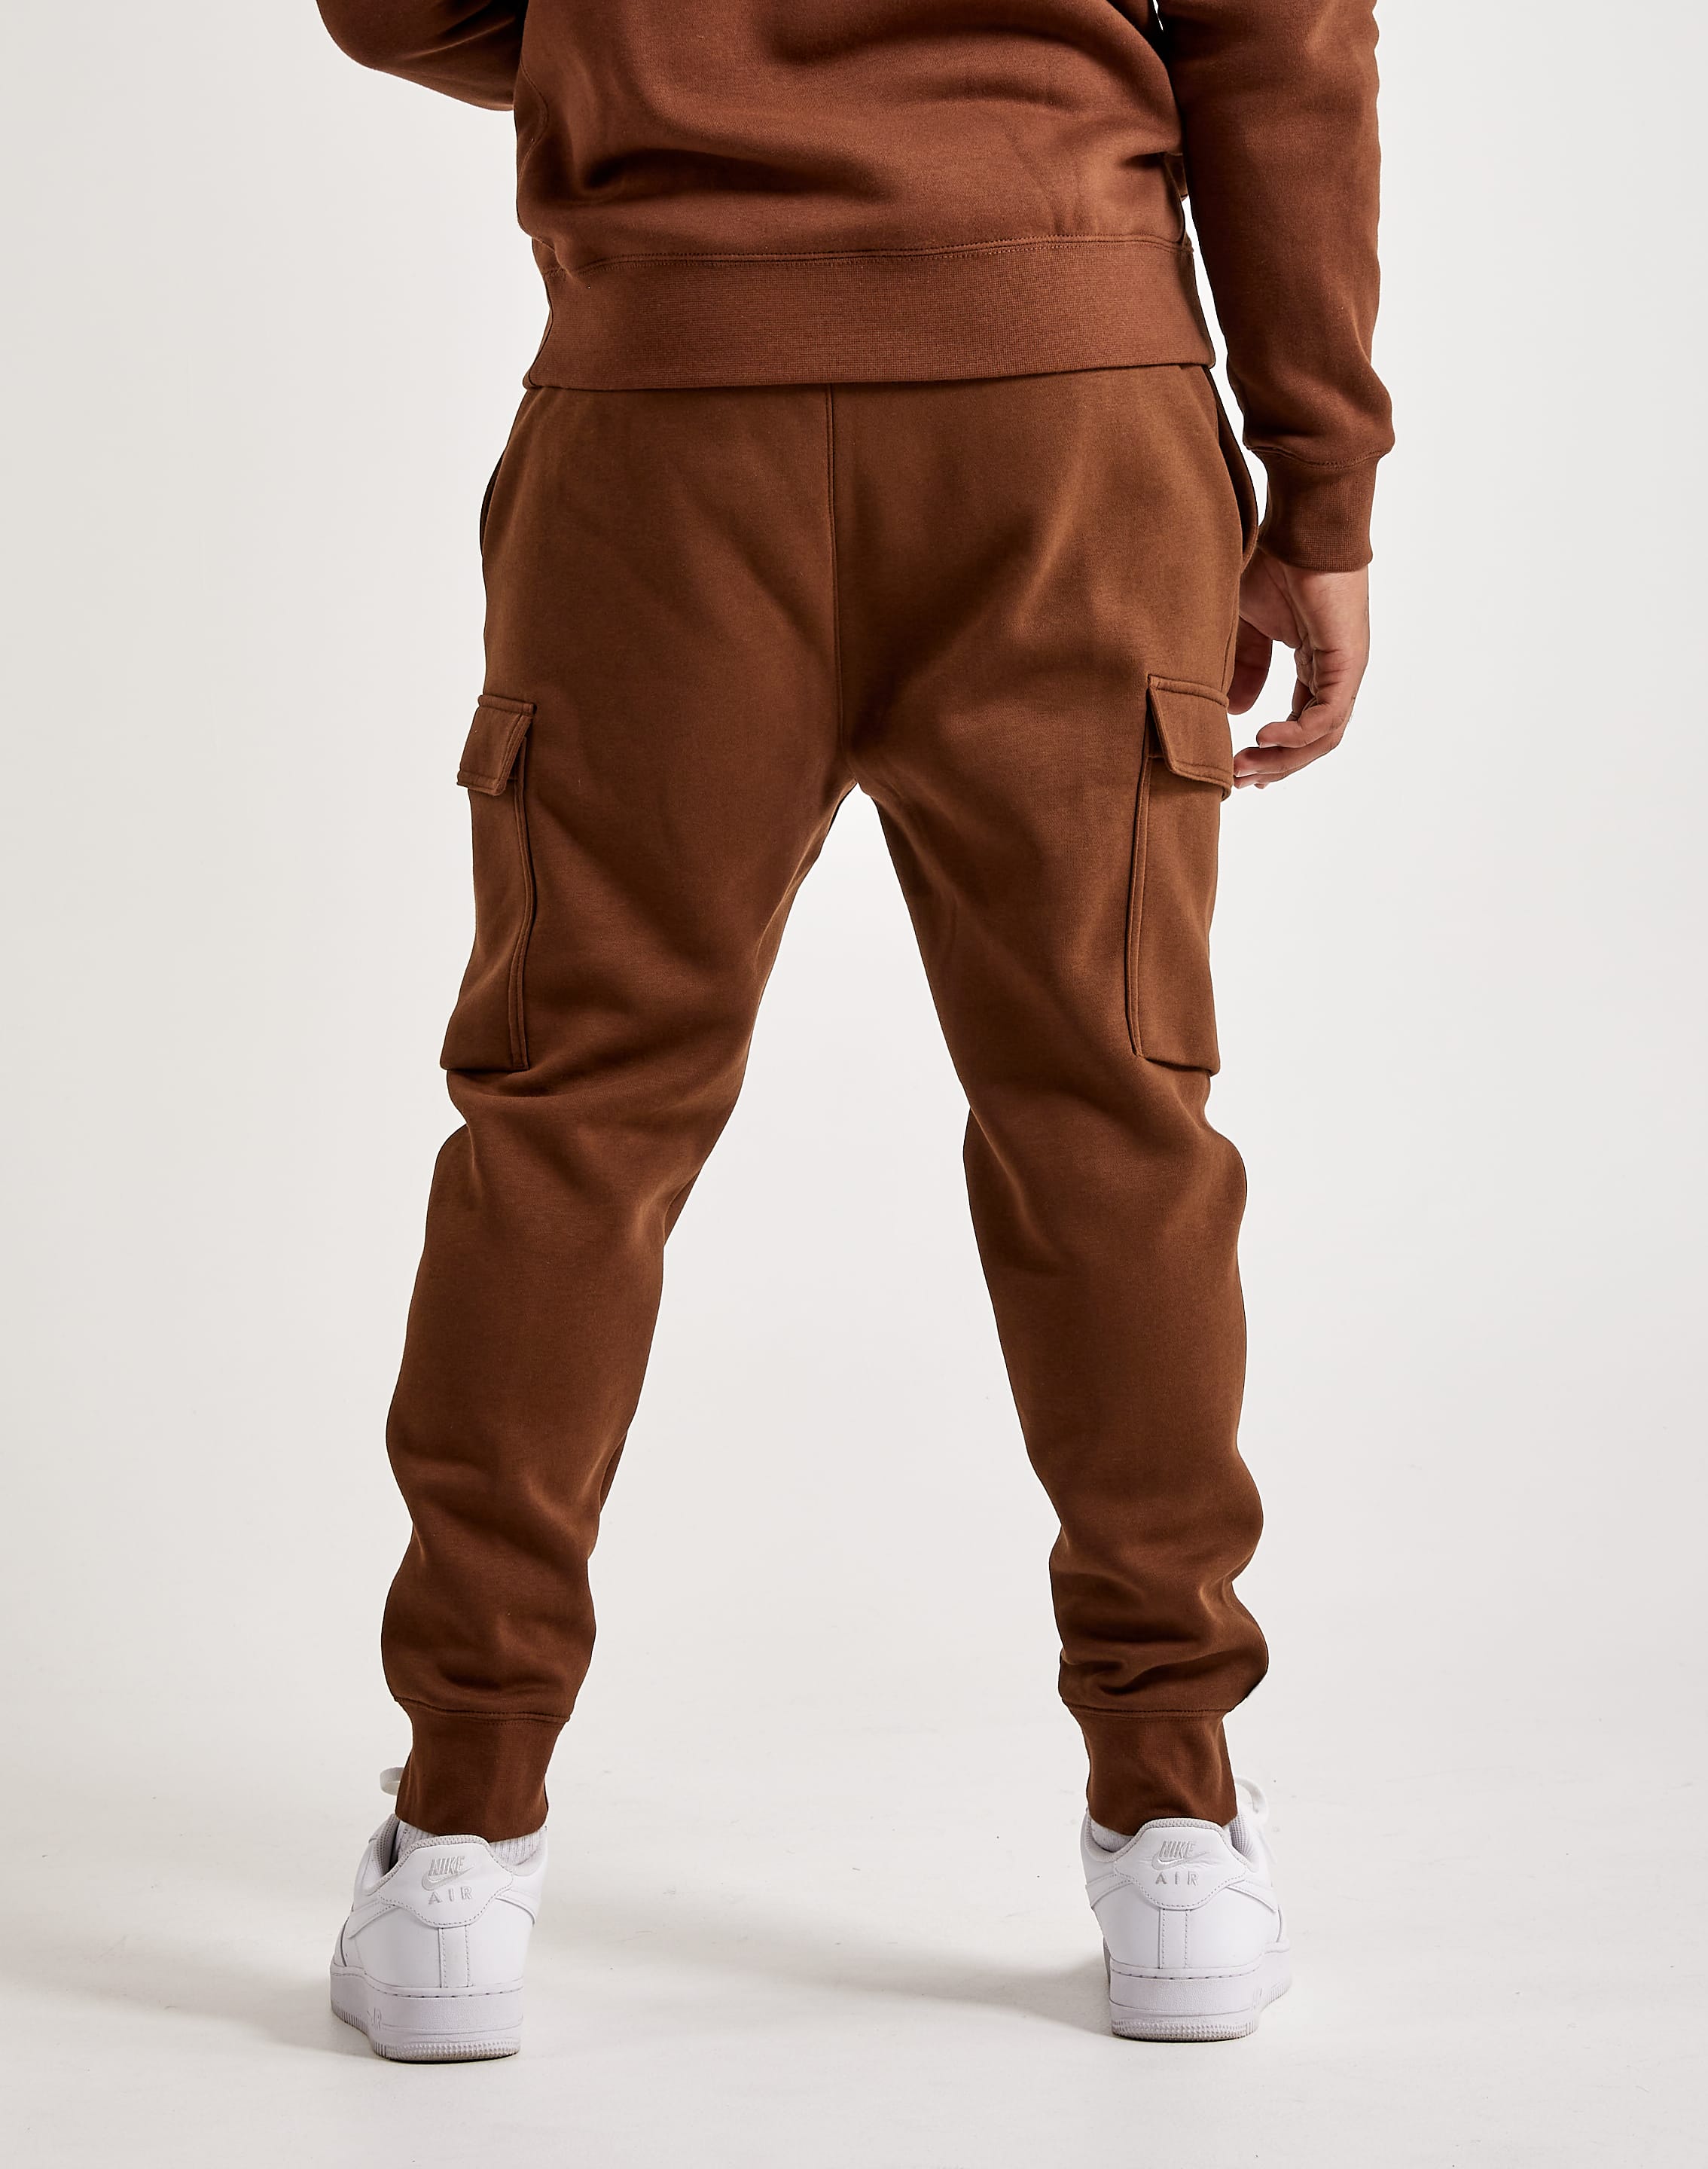 Pro 5 Mens Fleece Cargo Sweatpants,Dark Grey,3XL - Walmart.com